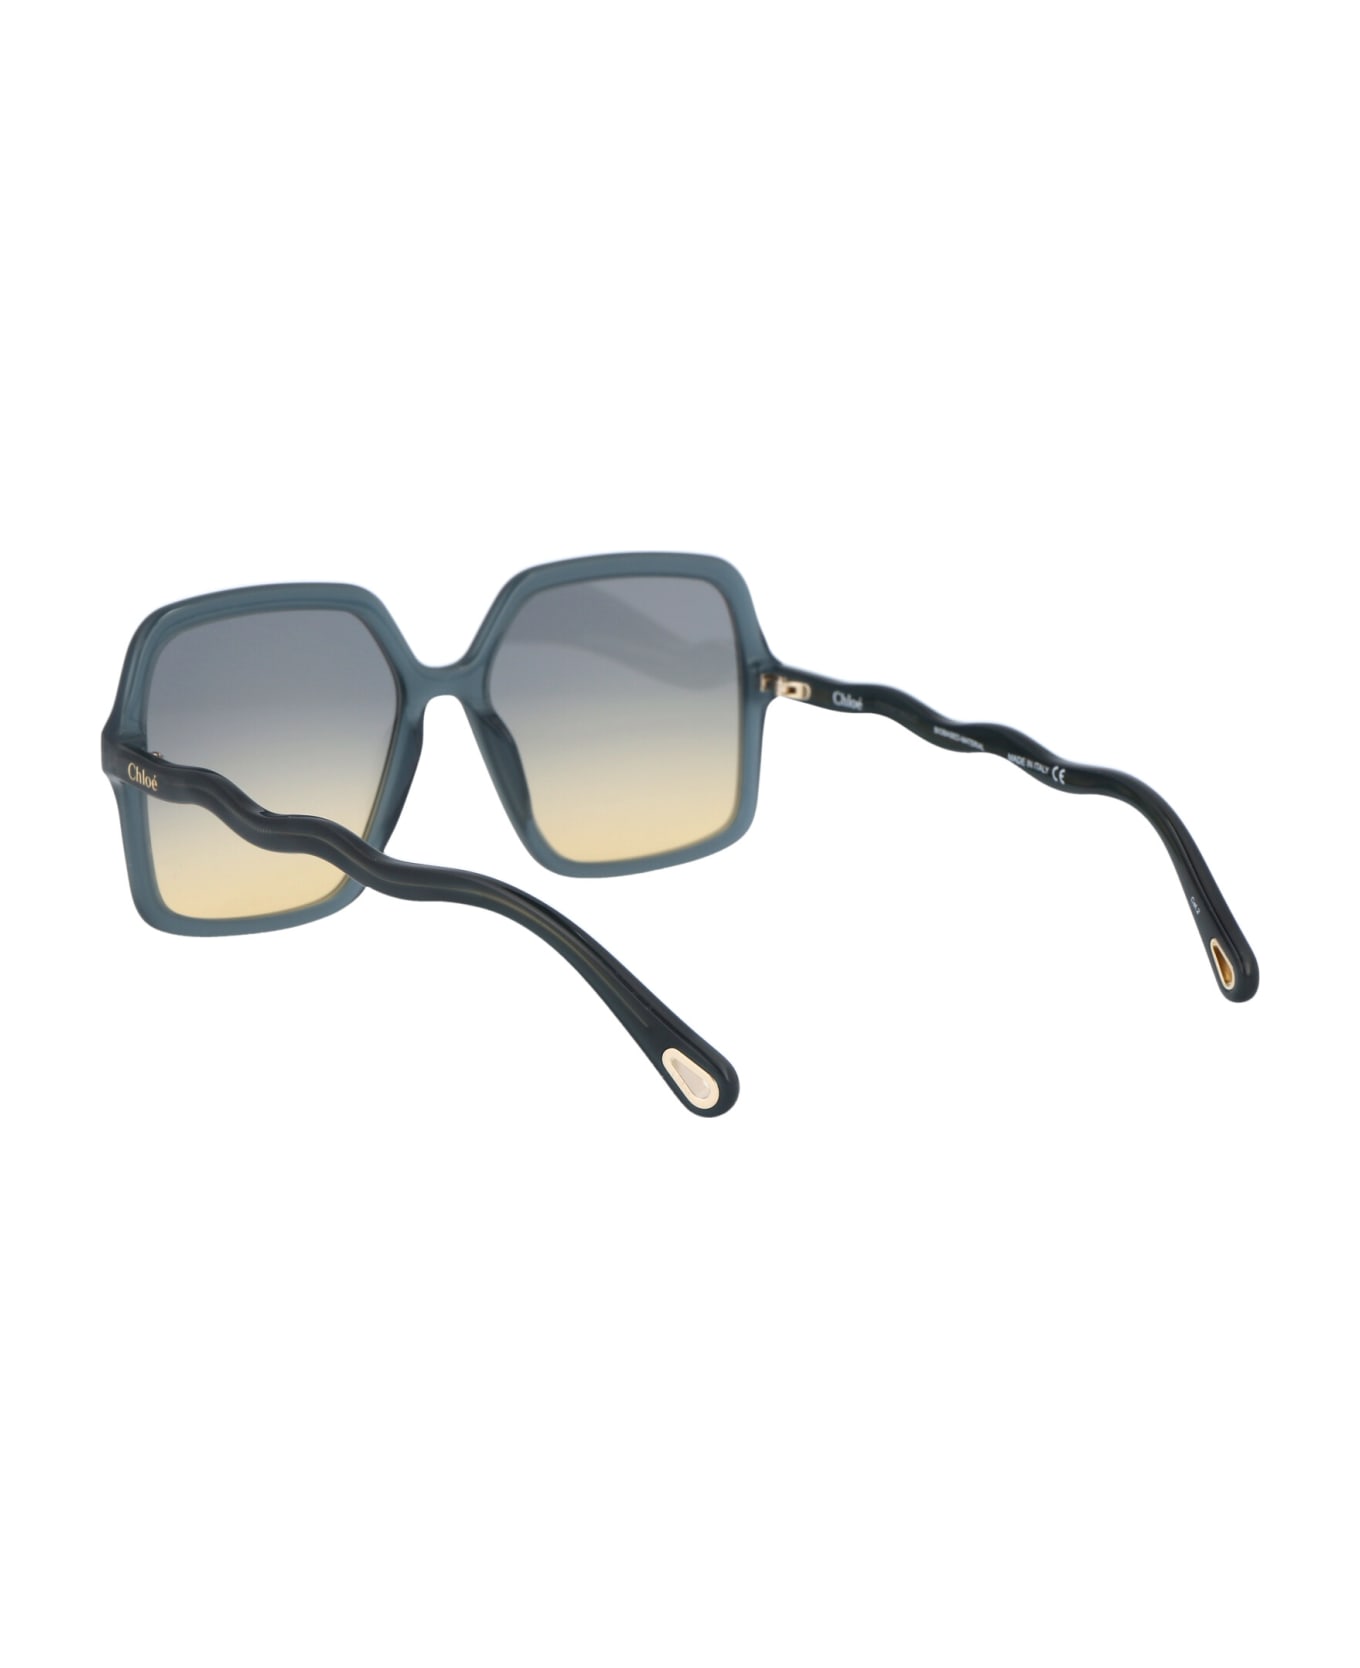 Chloé Eyewear Ch0086s Sunglasses - 004 BLUE BLUE BLUE サングラス